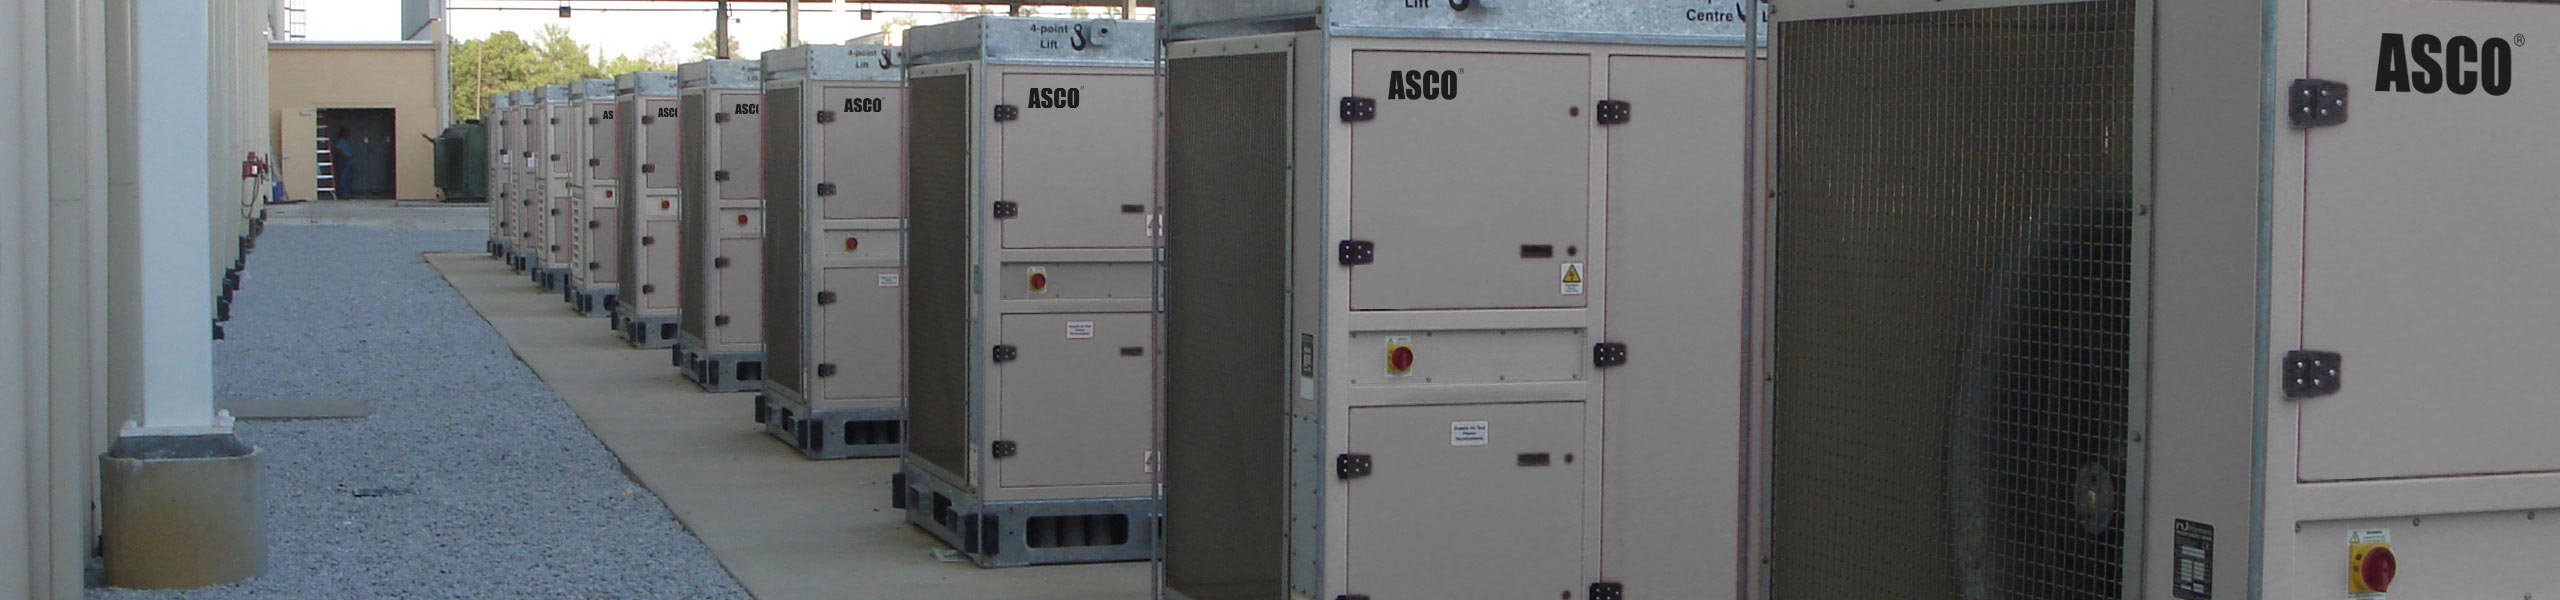 ASCO 3110 load banks in use